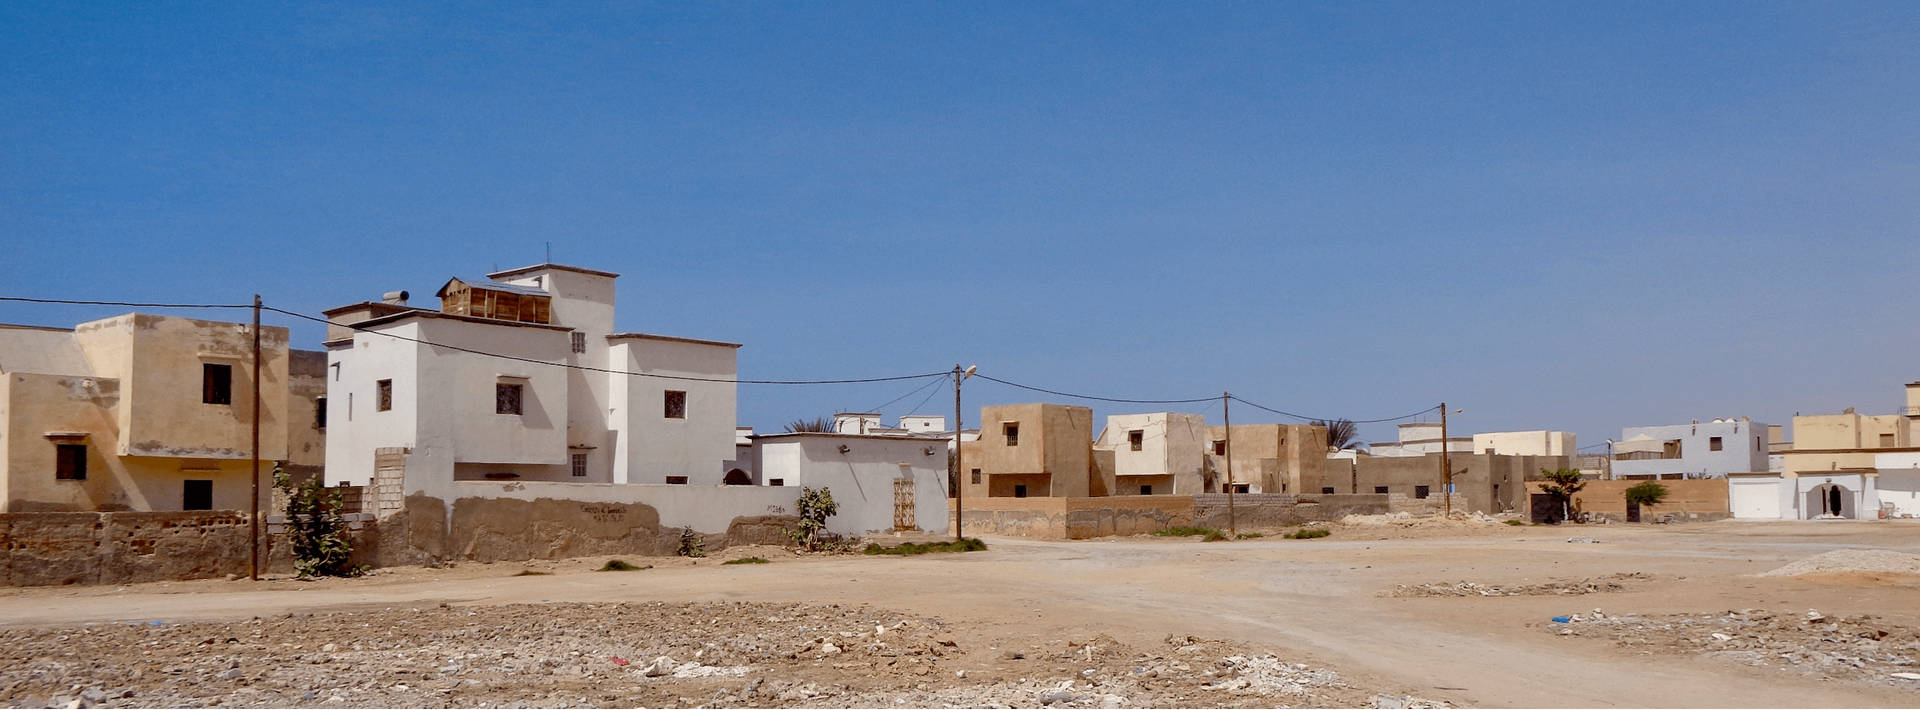 Häuserin Nouakchott, Mauretanien Wallpaper